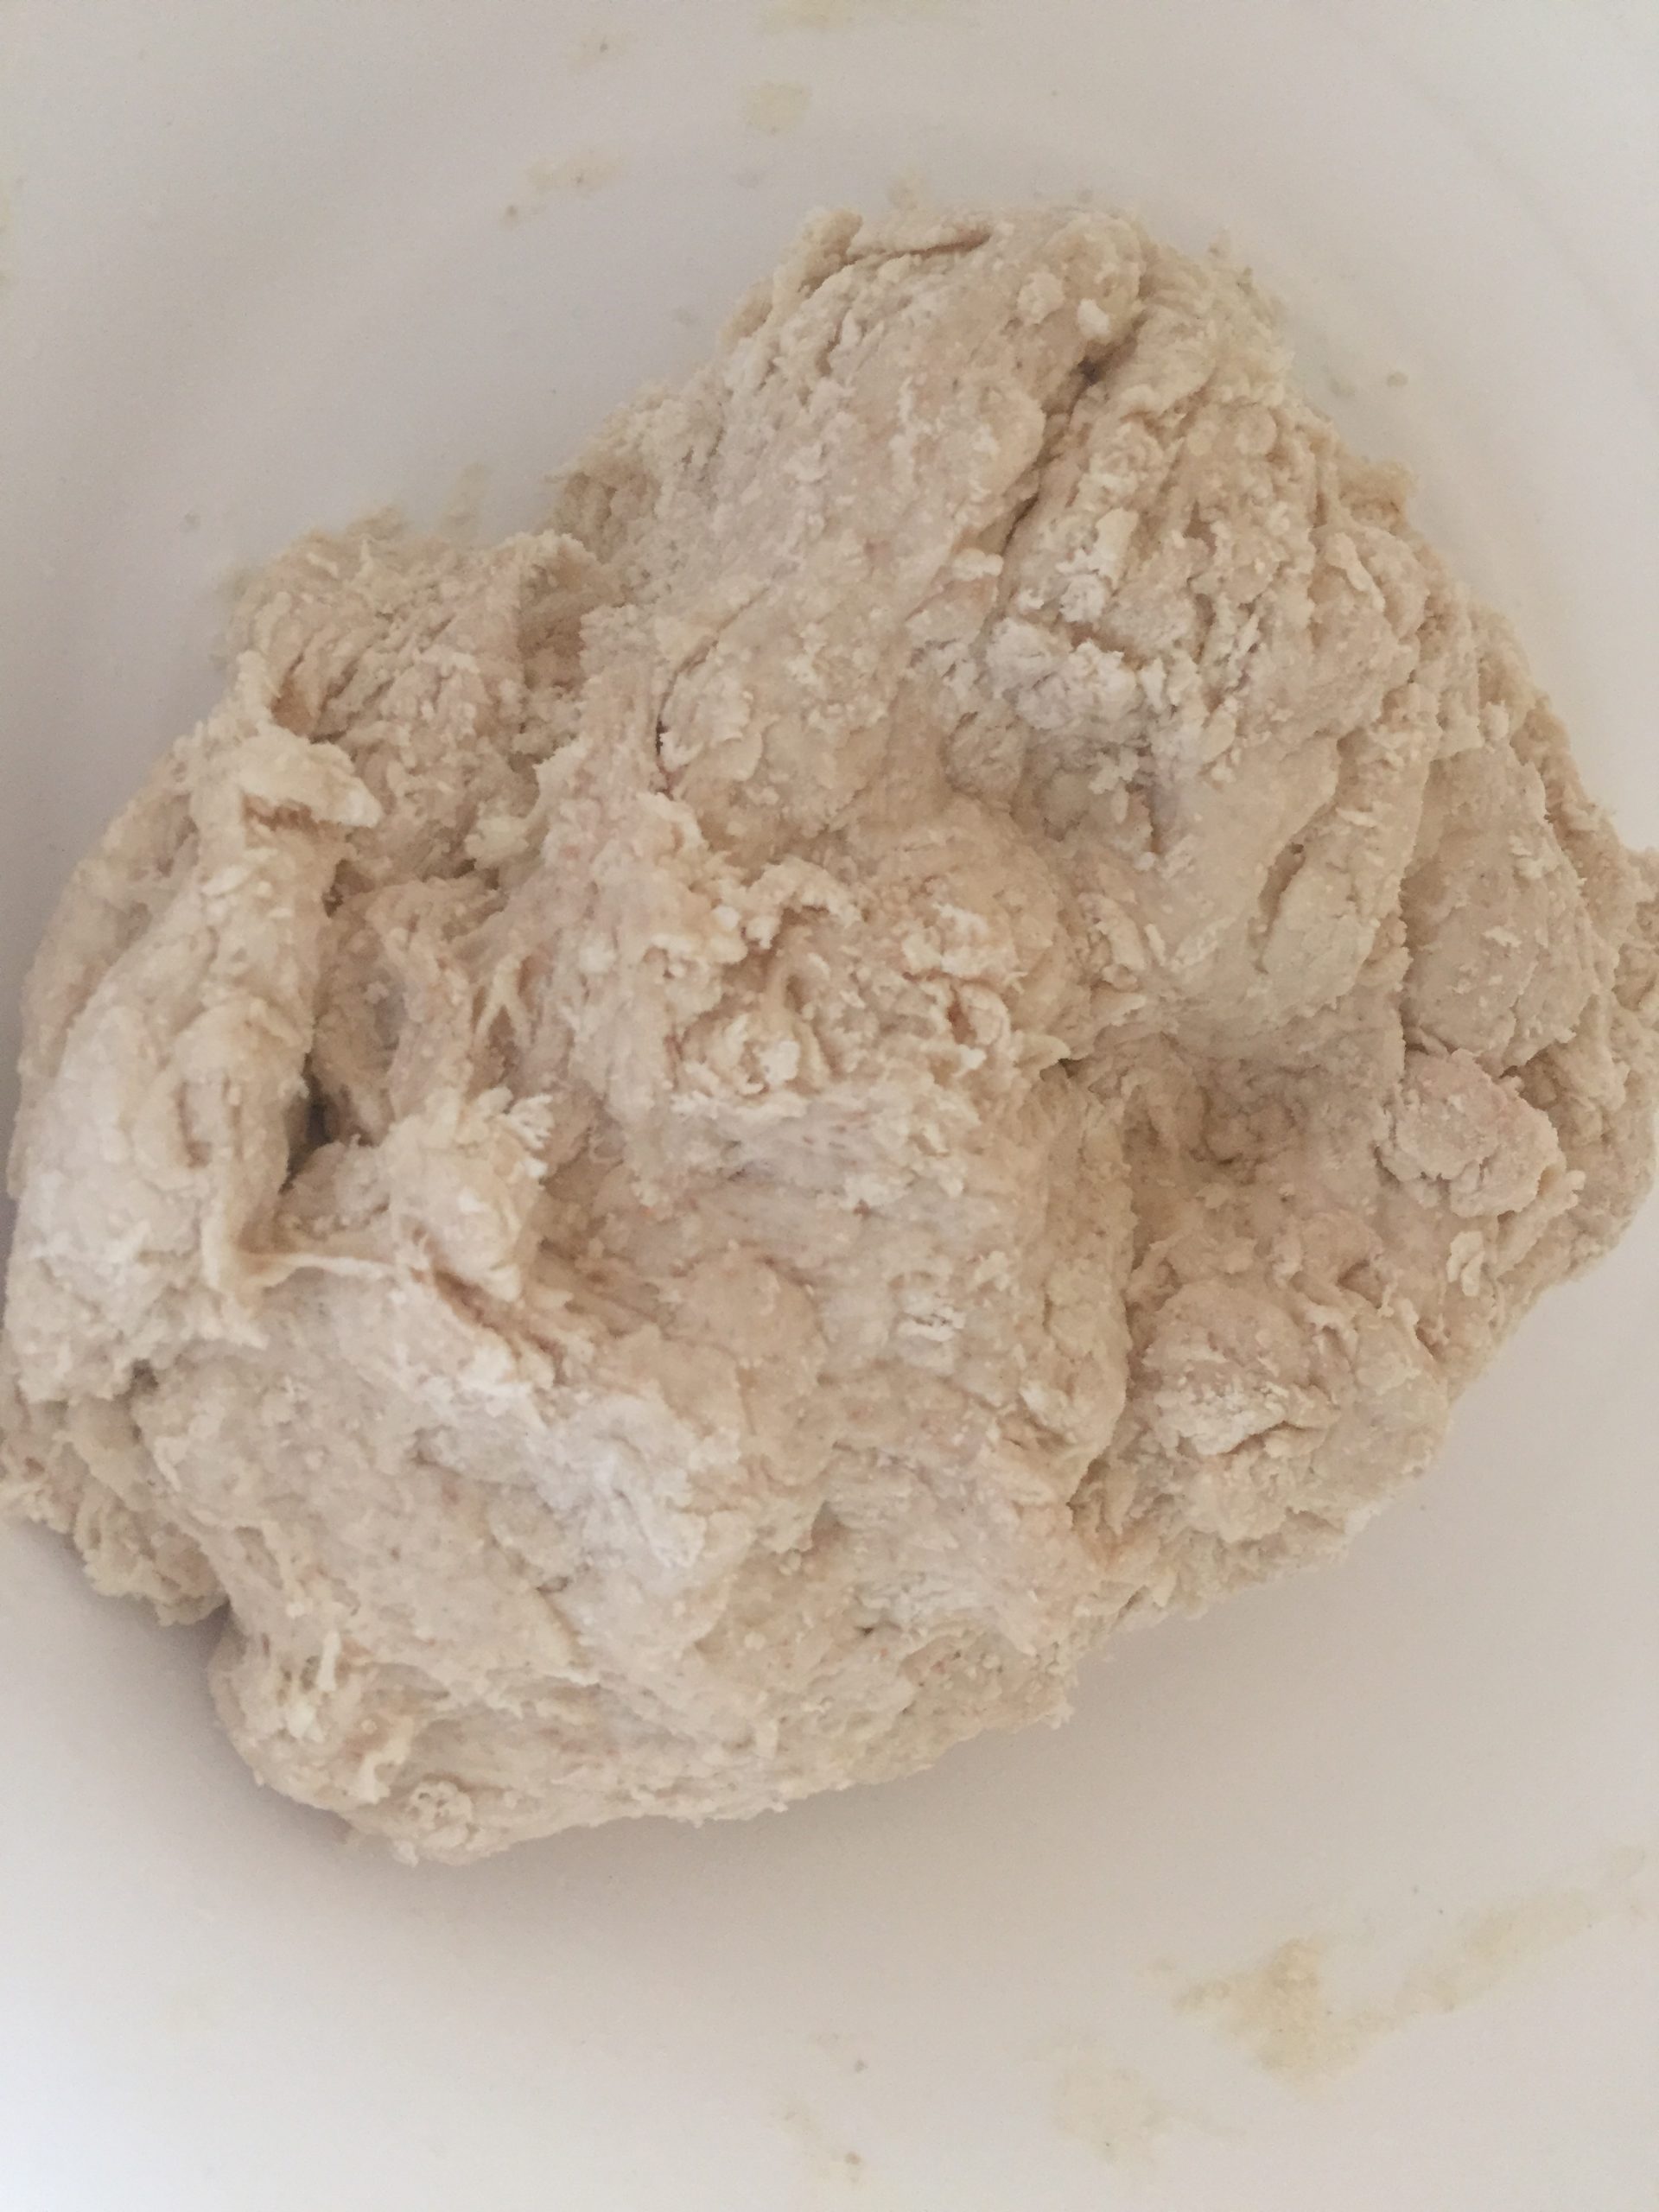 Mix flour with levain, milk and kefir